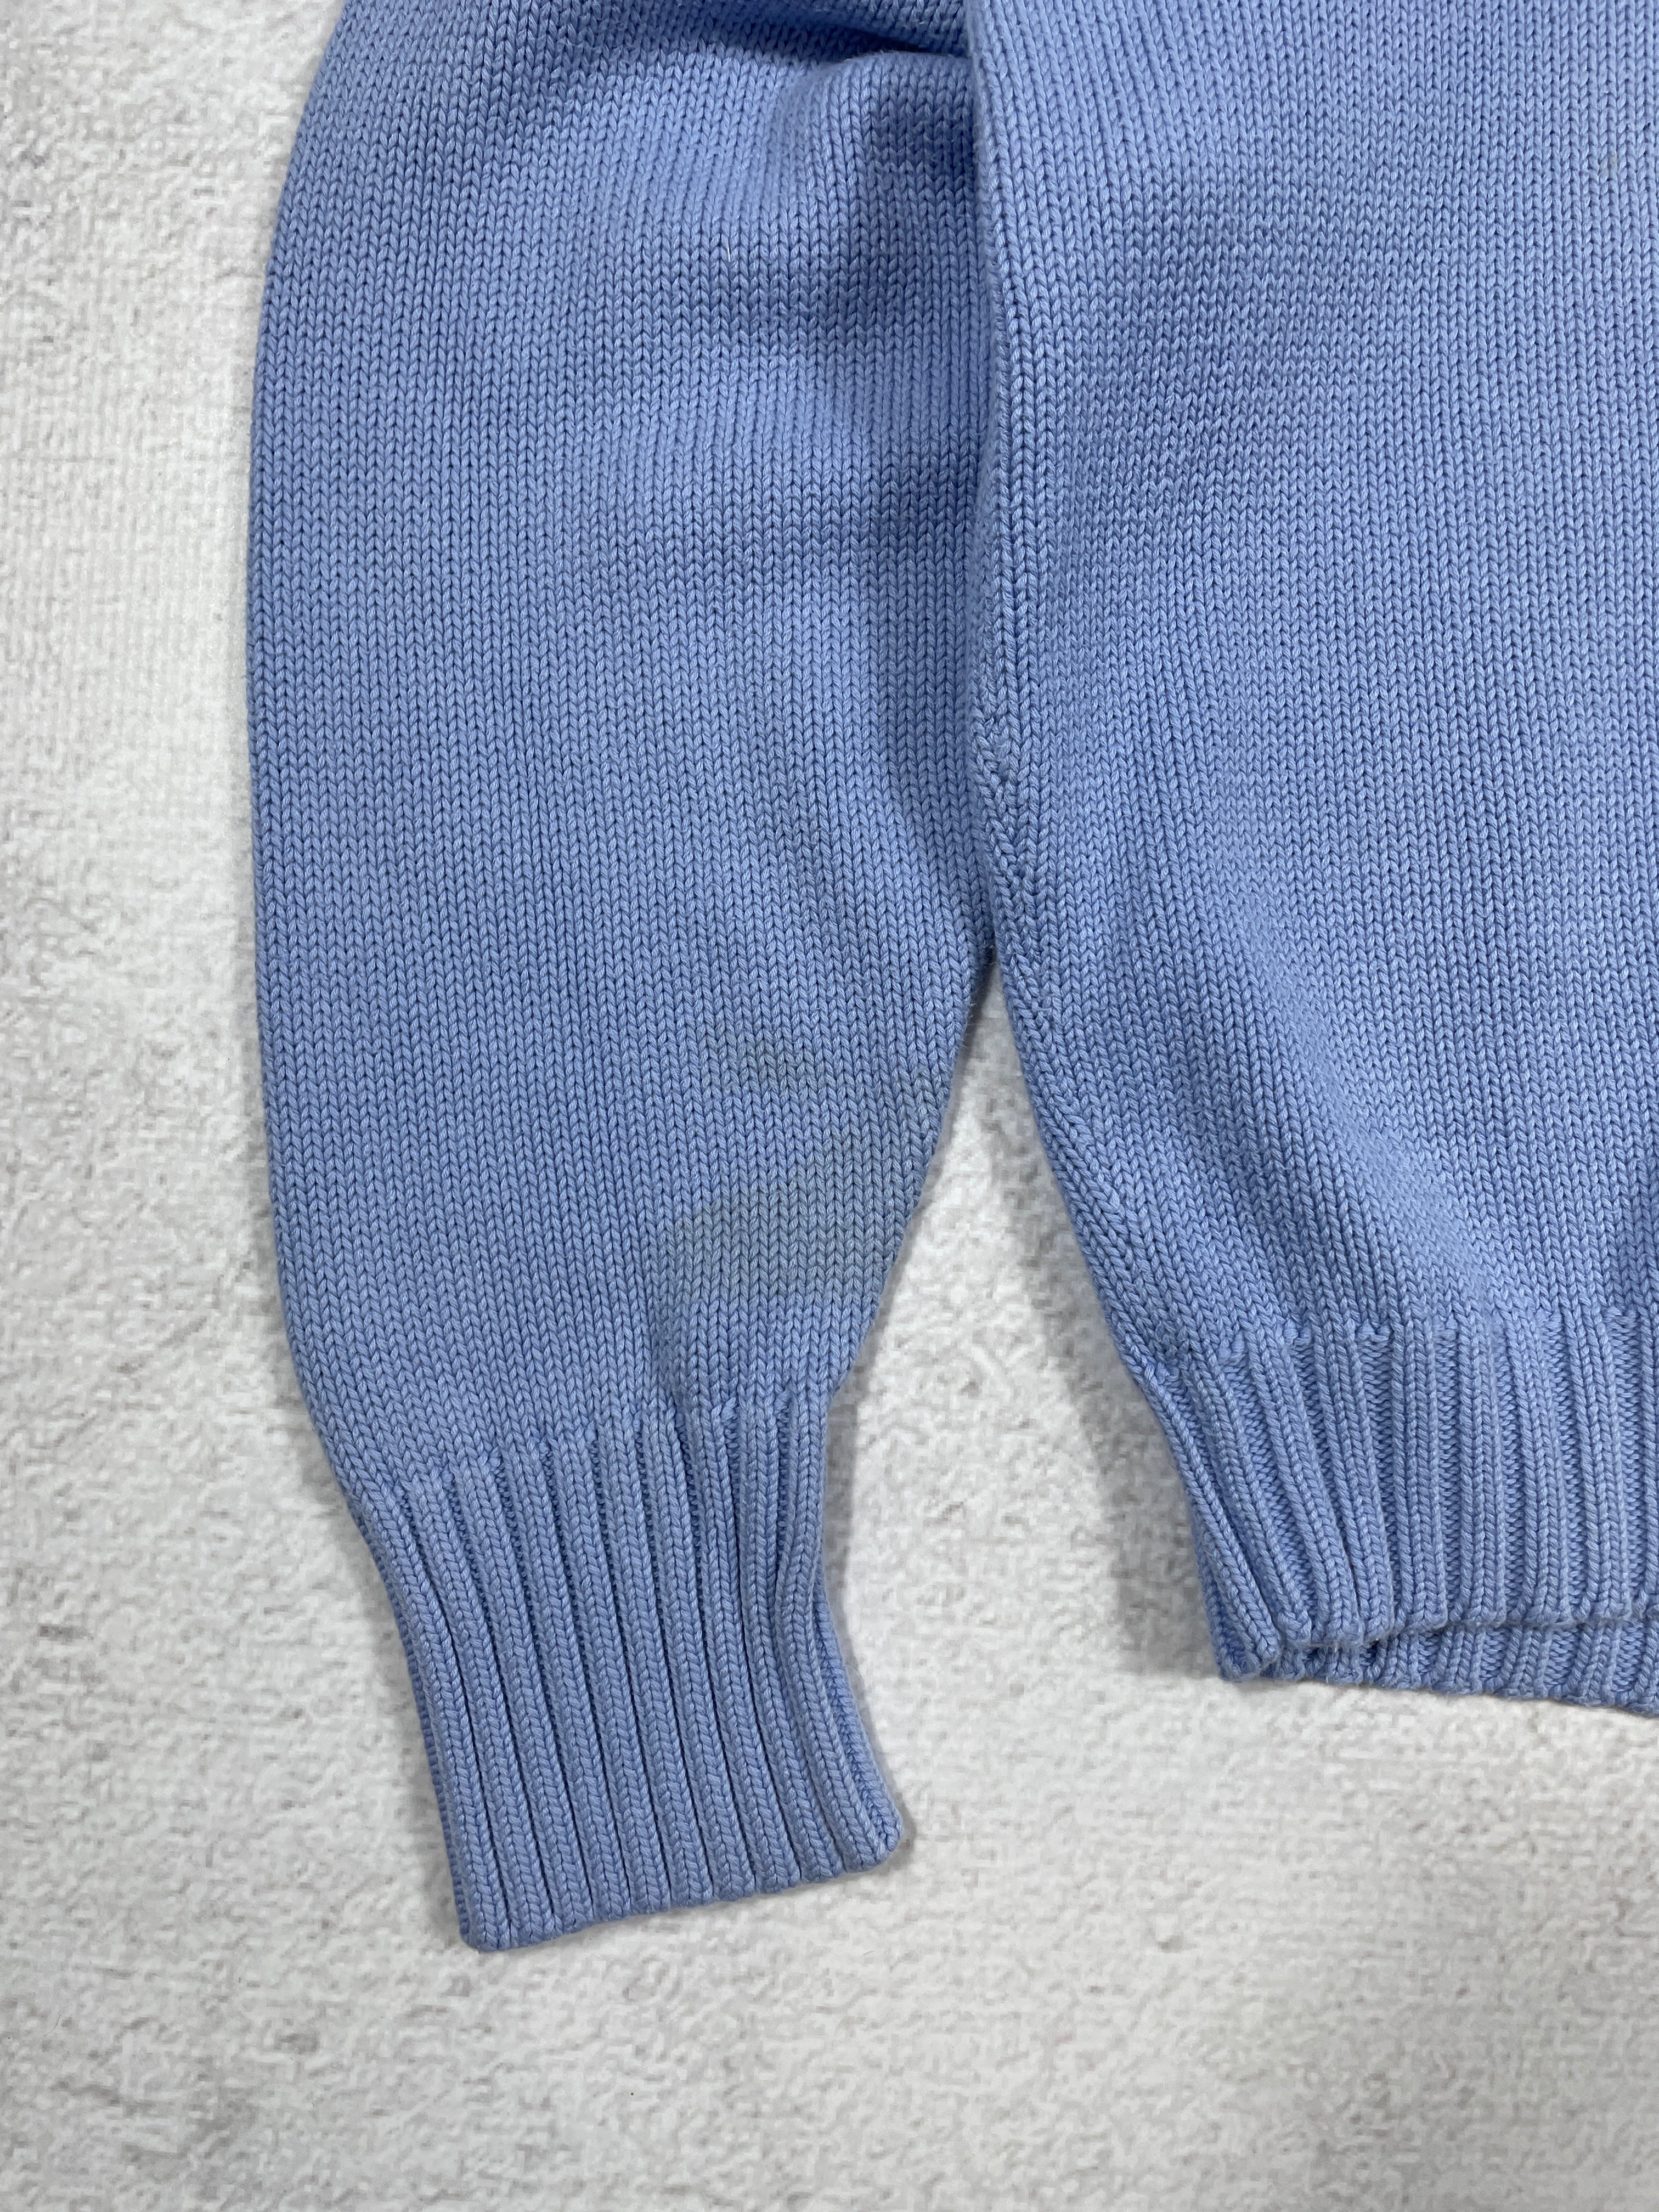 Vintage Polo Ralph Lauren Knitted Sweatshirt - Men's XL